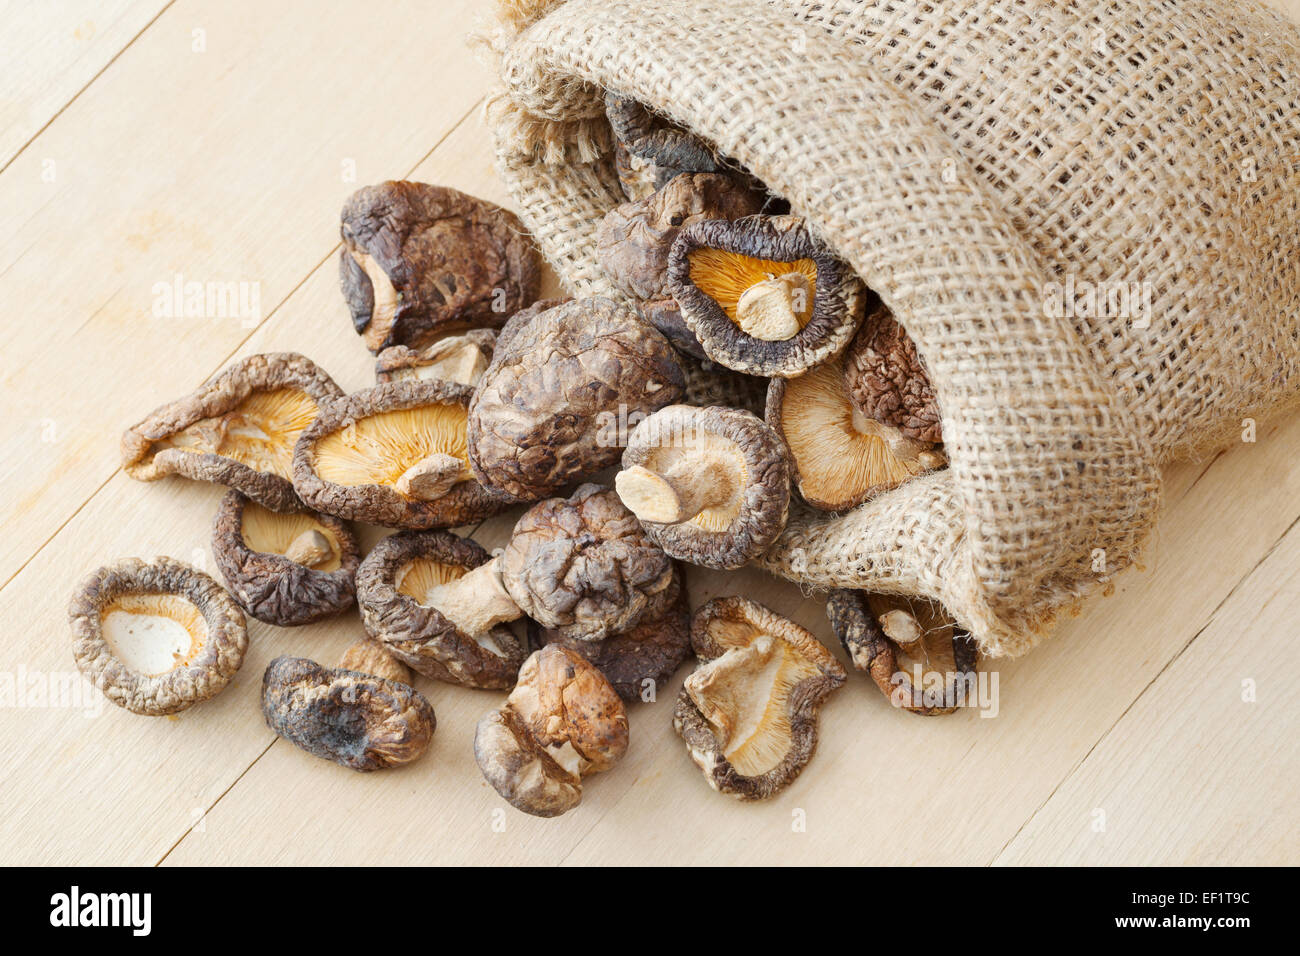 dried shiitake mushroom in hessian bag on kitchen table Stock Photo